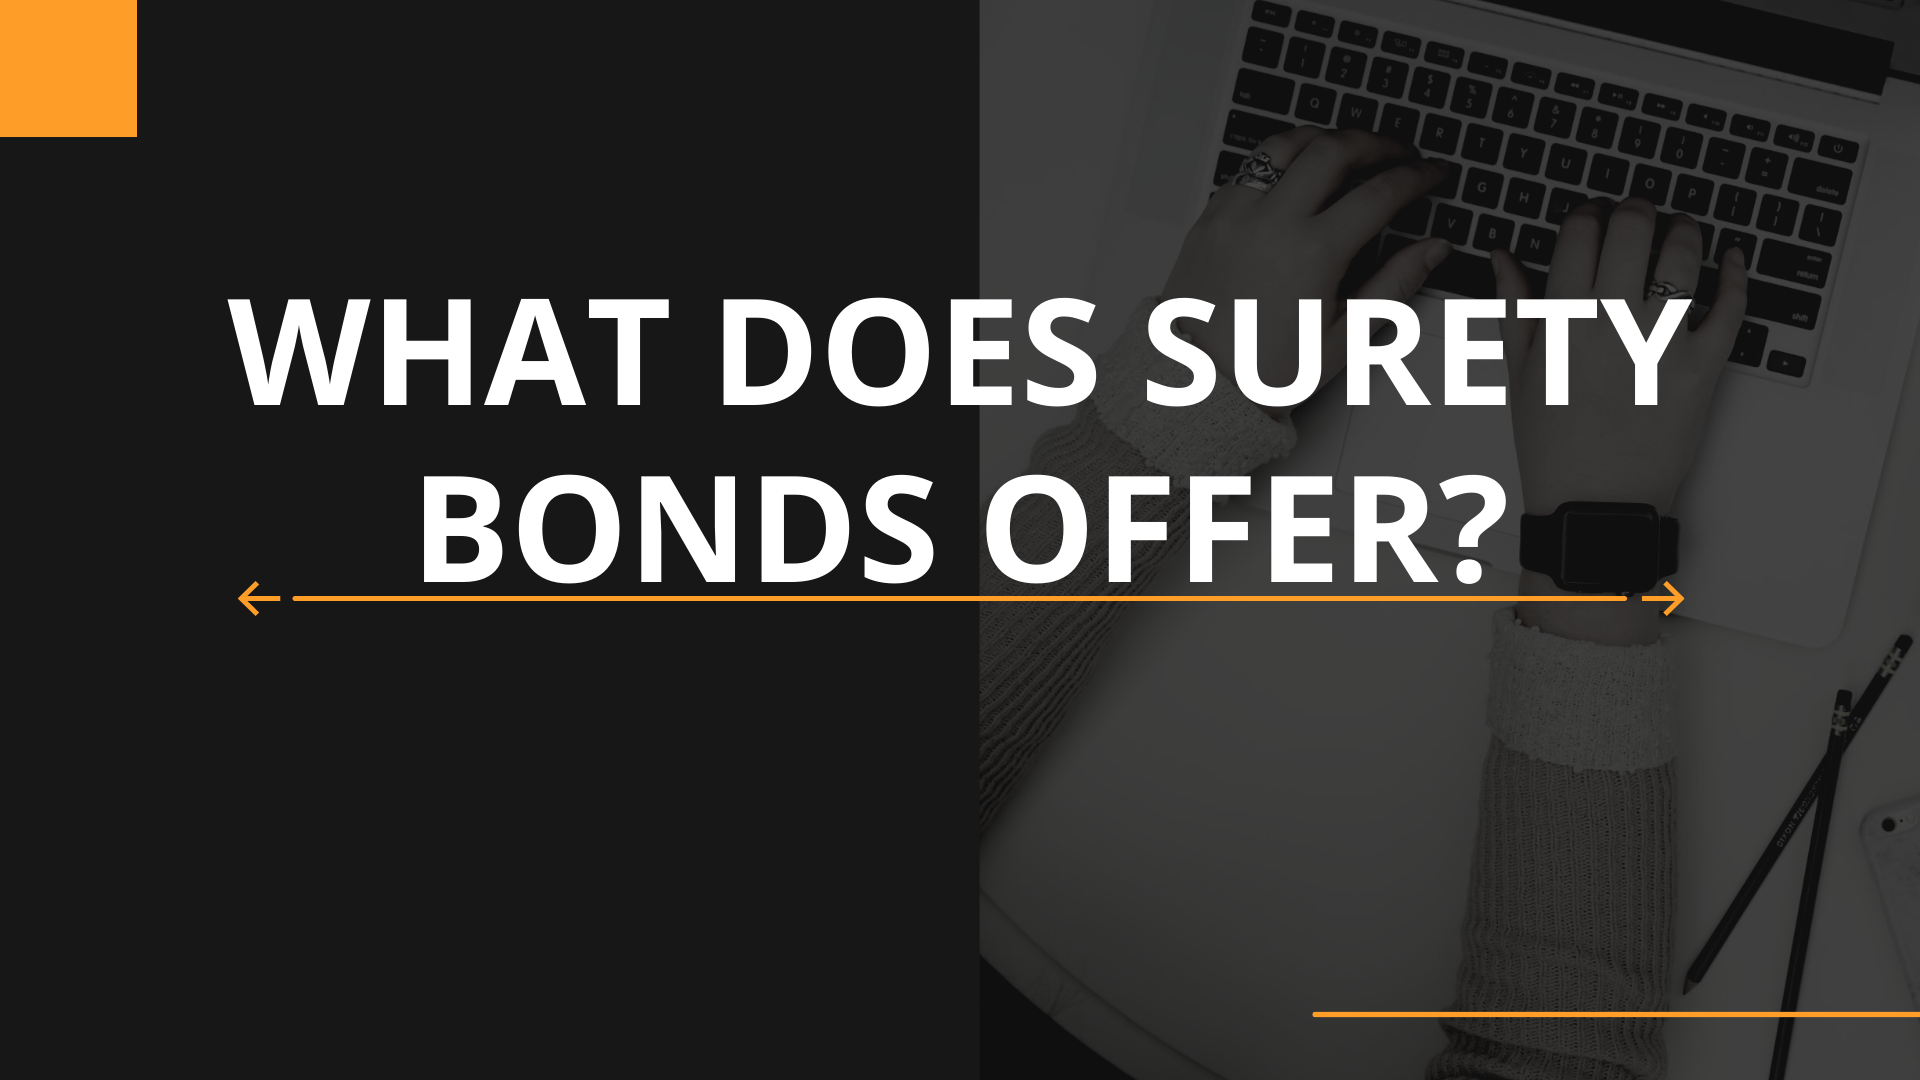 surety bond - Who may offer a surety bond - computer